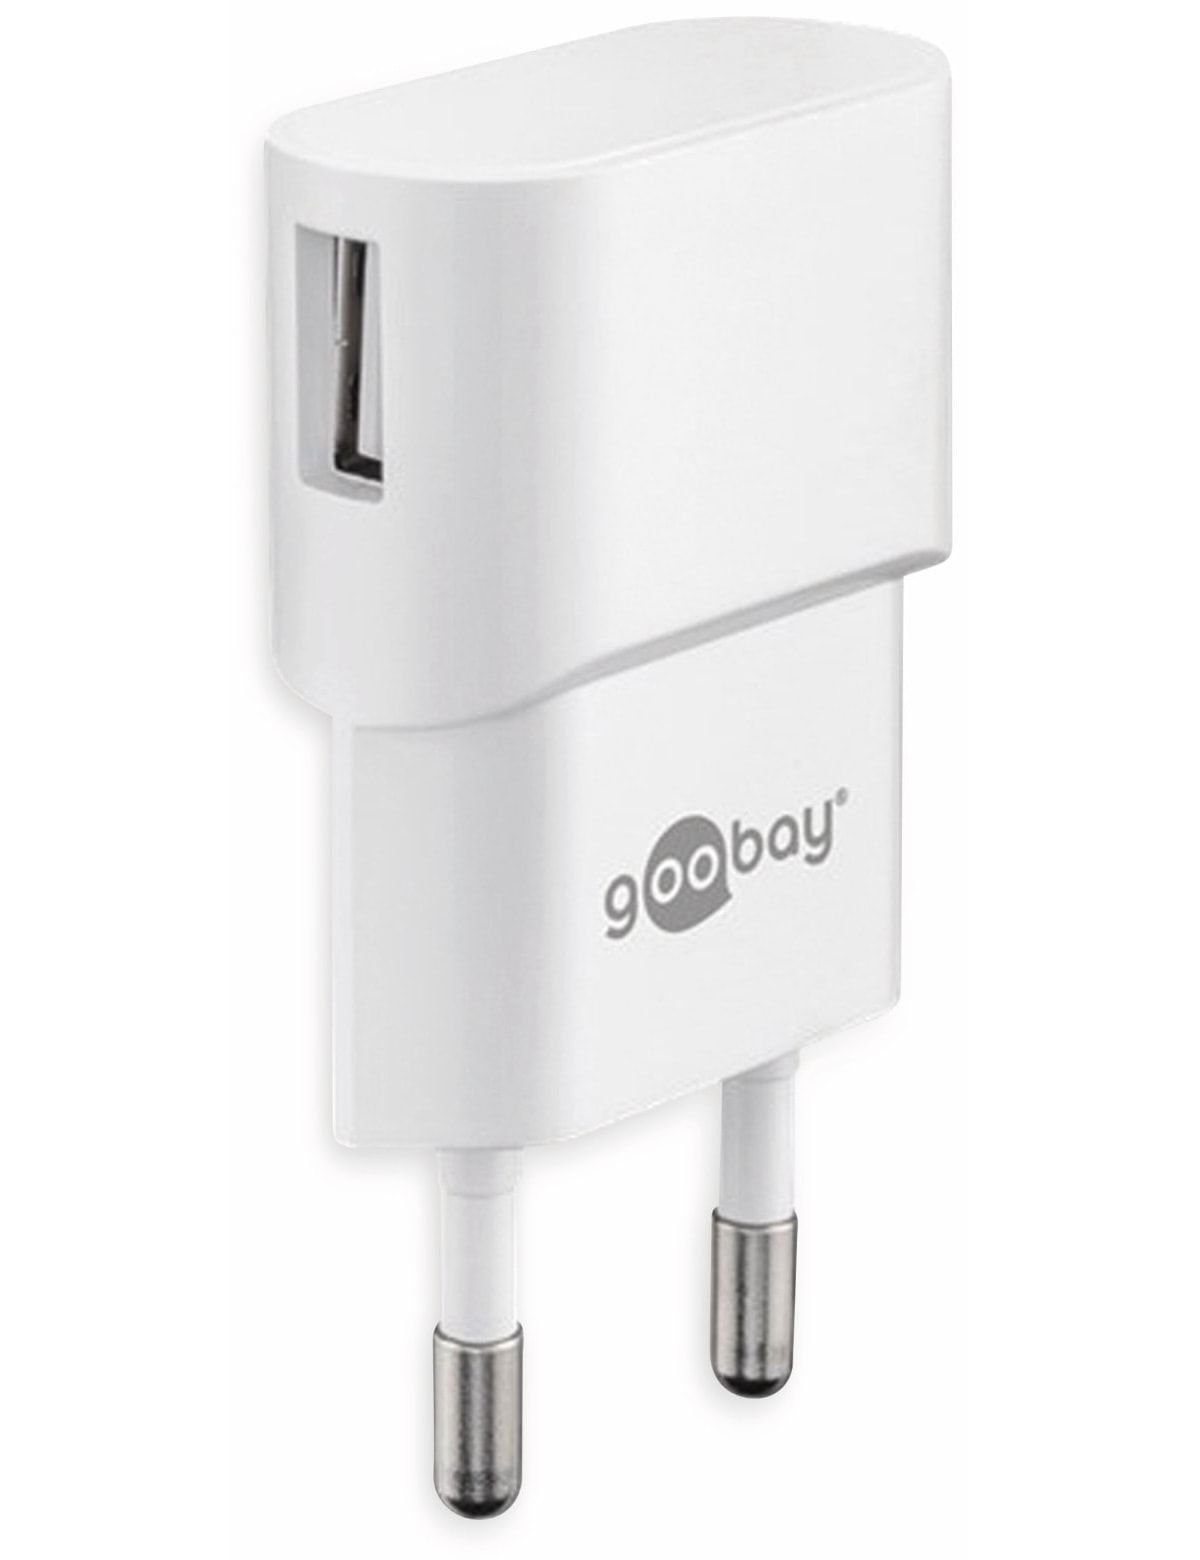 Goobay GOOBAY USB-Lader 44948, 1 A, 5 W, weiß USB-Ladegerät